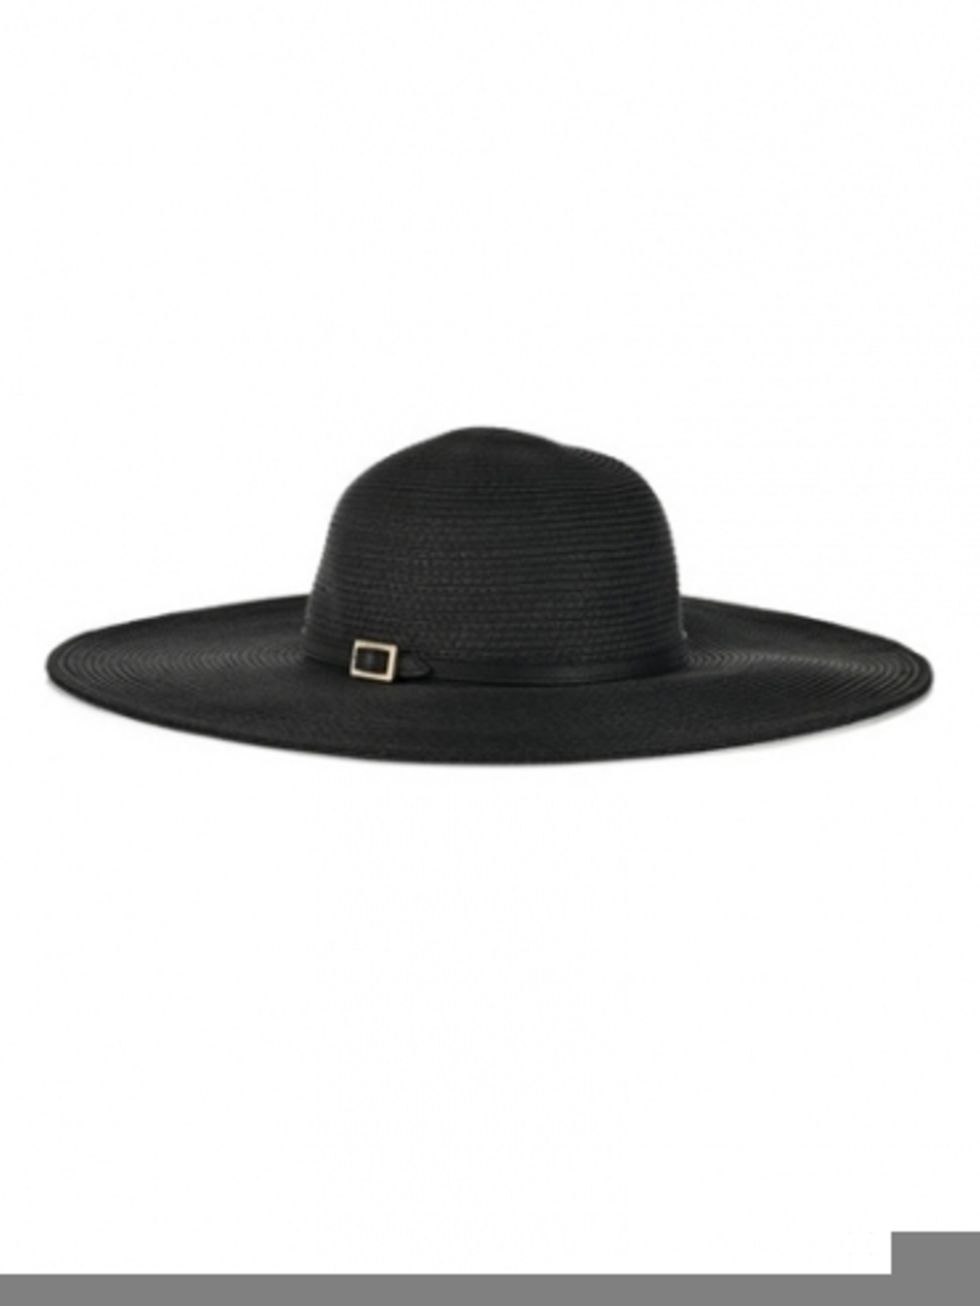 Hat, Fashion accessory, Style, Line, Headgear, Costume hat, Costume accessory, Black, Beige, Black-and-white, 